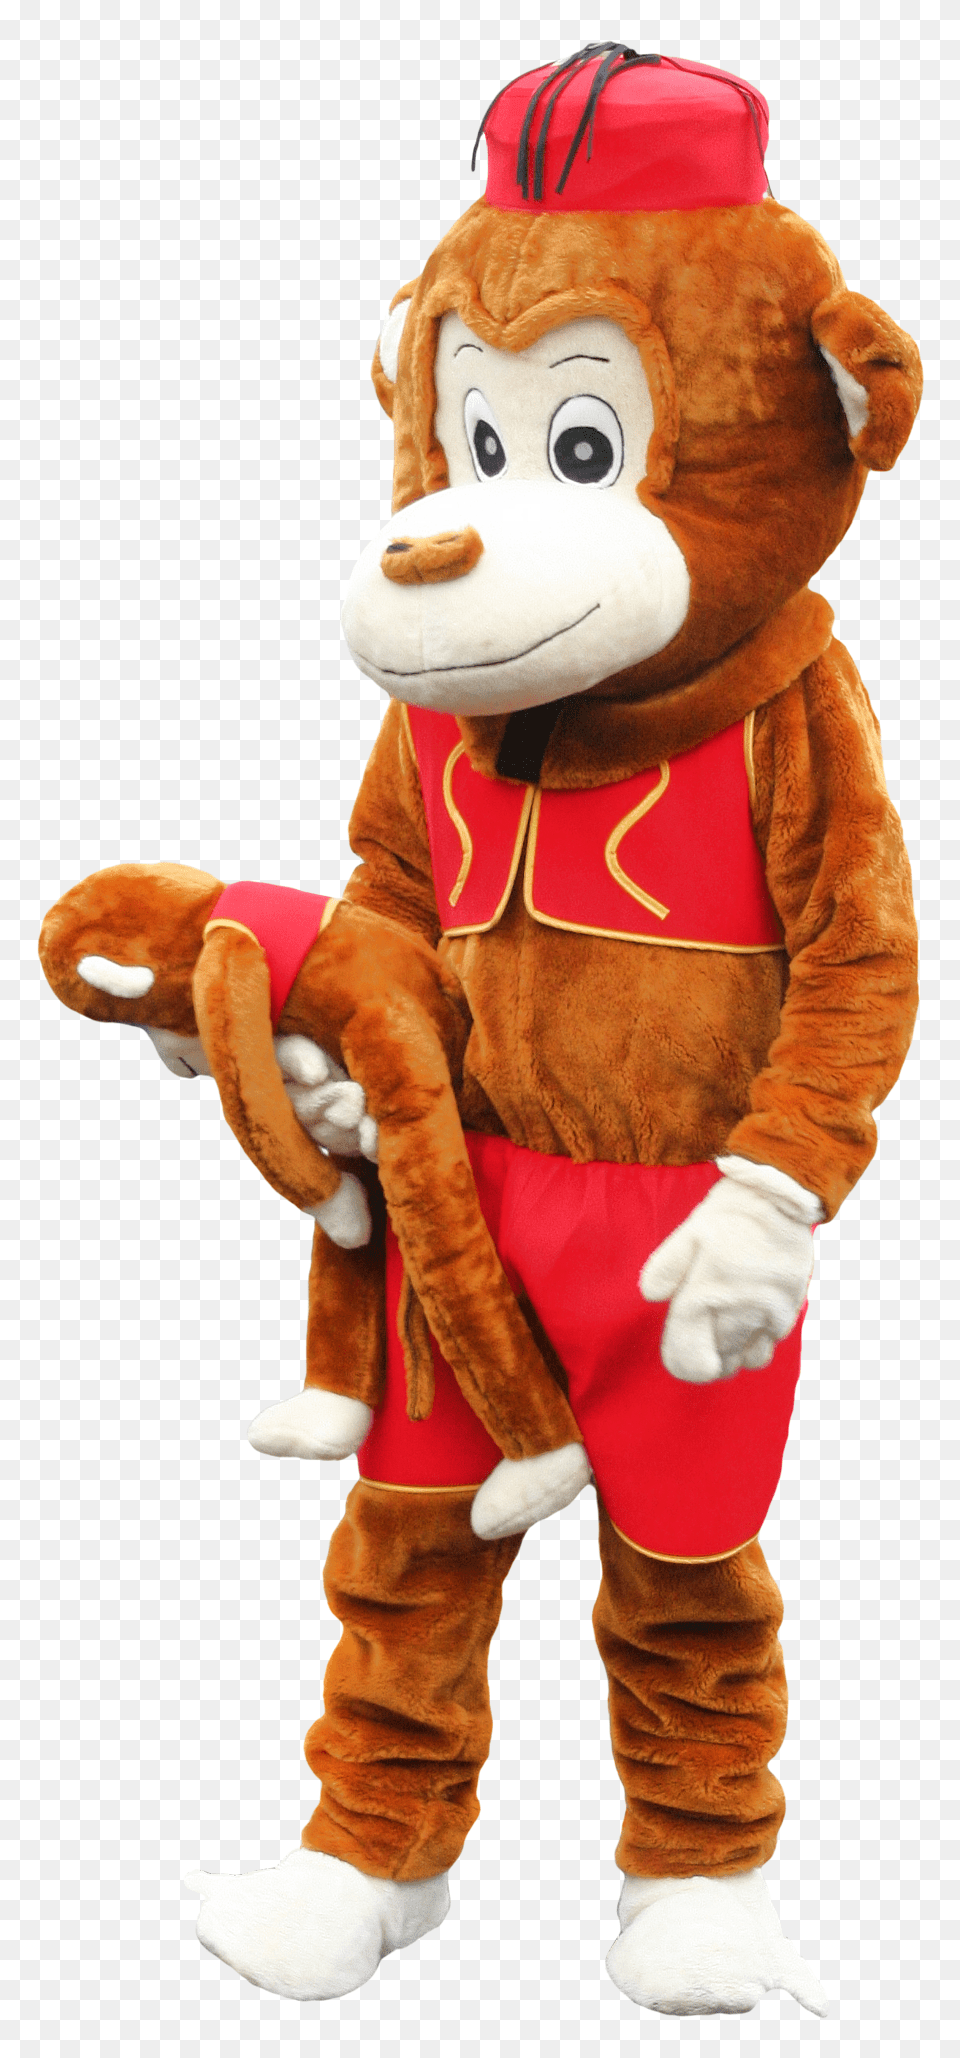 Monkey Toy Image Purepng Cc0 Monkey Toy, Clothing, Glove, Mascot Free Transparent Png